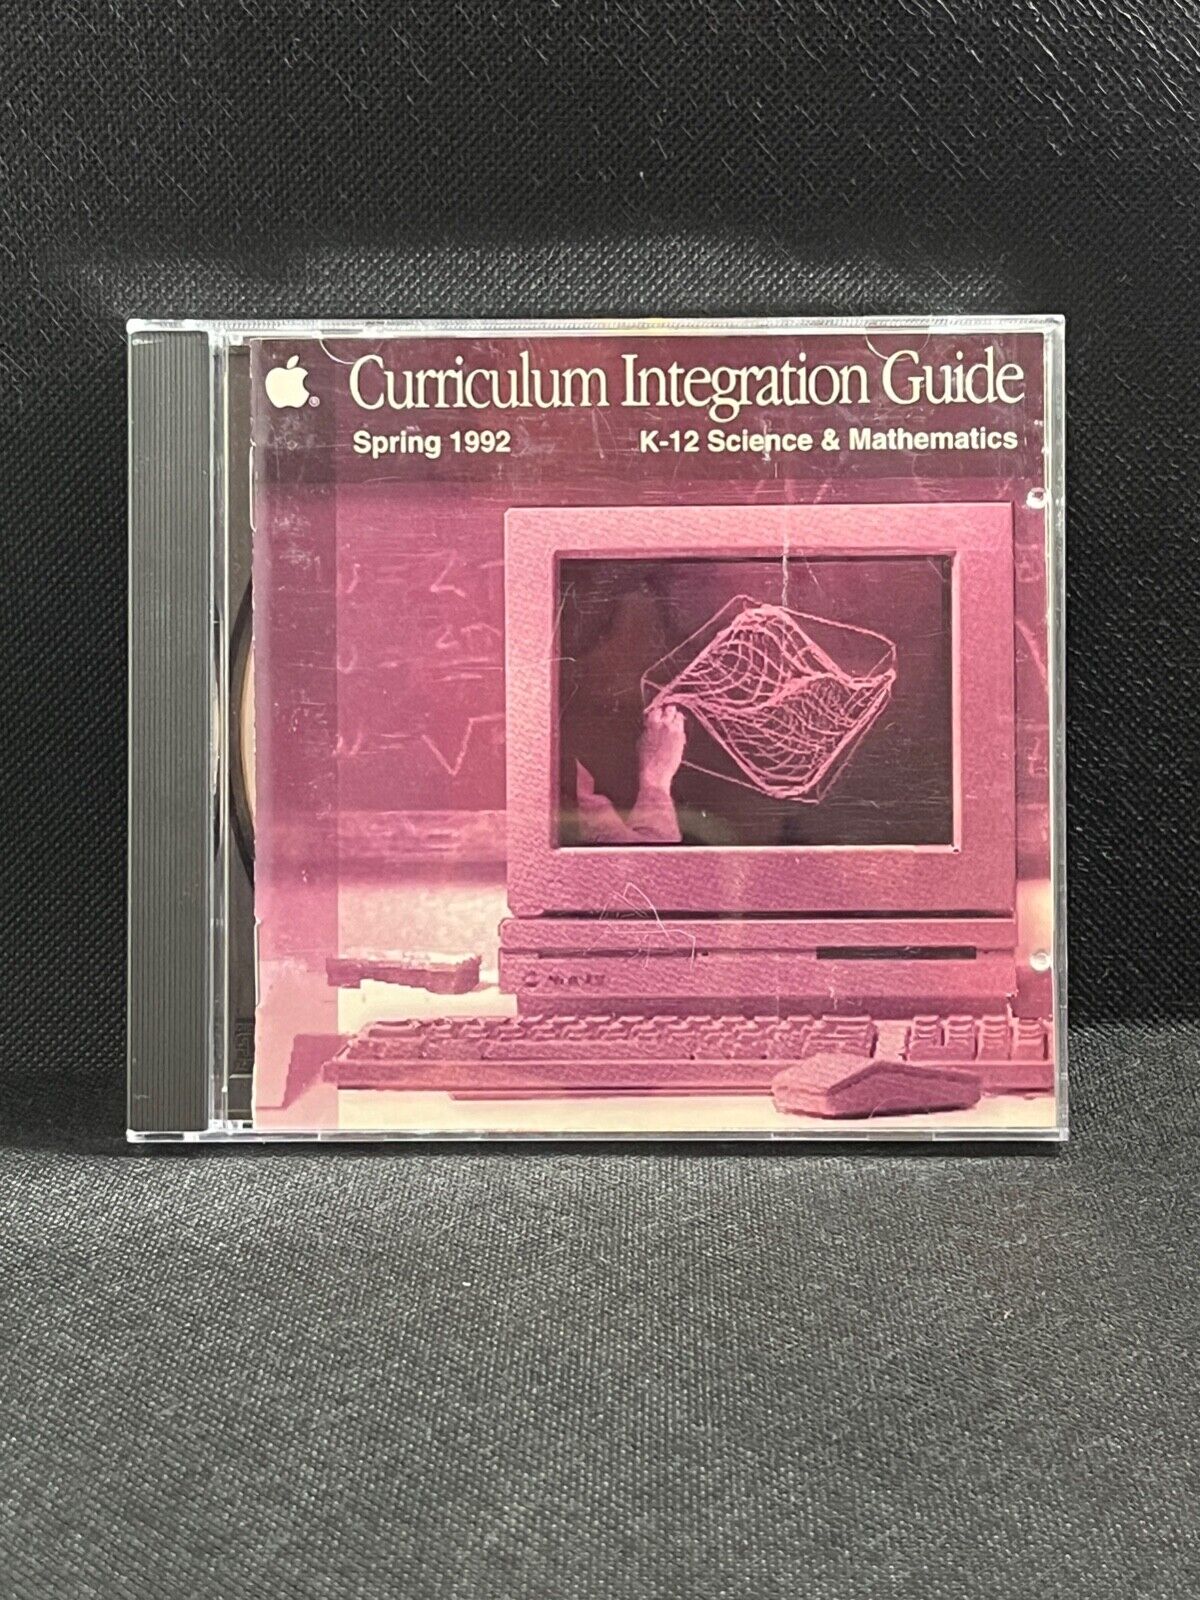 Rare, Vintage Apple Educational CD, 1992 Curriculum Integration Guide K-12